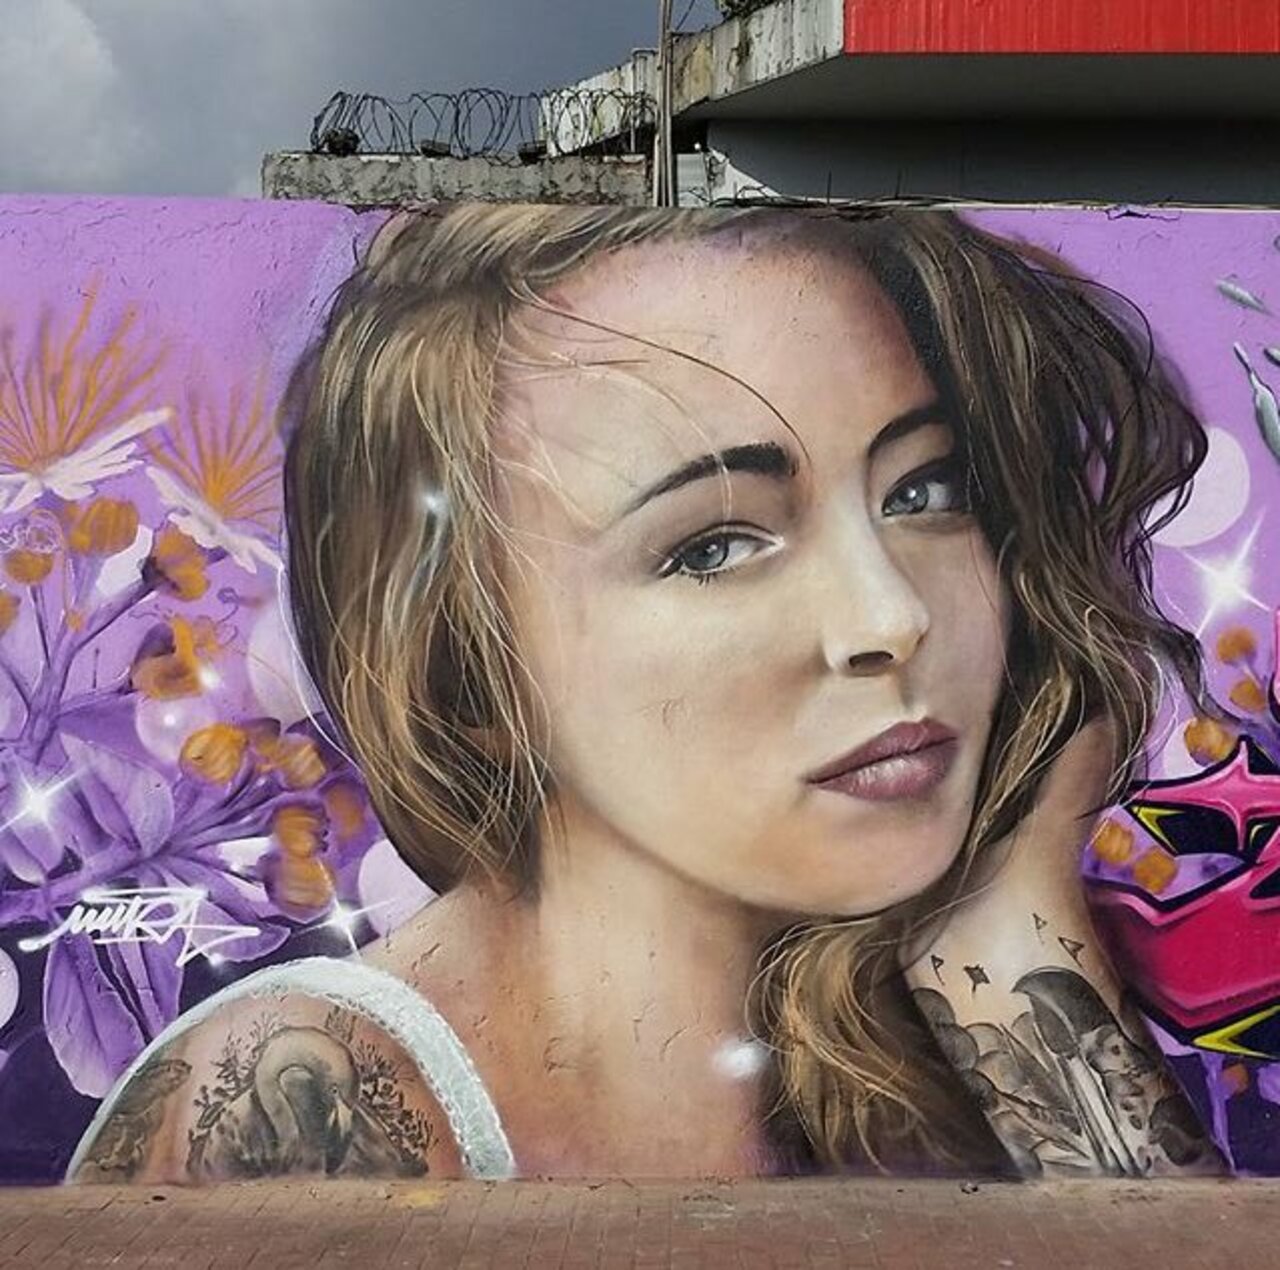 New Street Art by Mantarea 

#art #graffiti #mural #streetart https://t.co/veXcjTjQSP